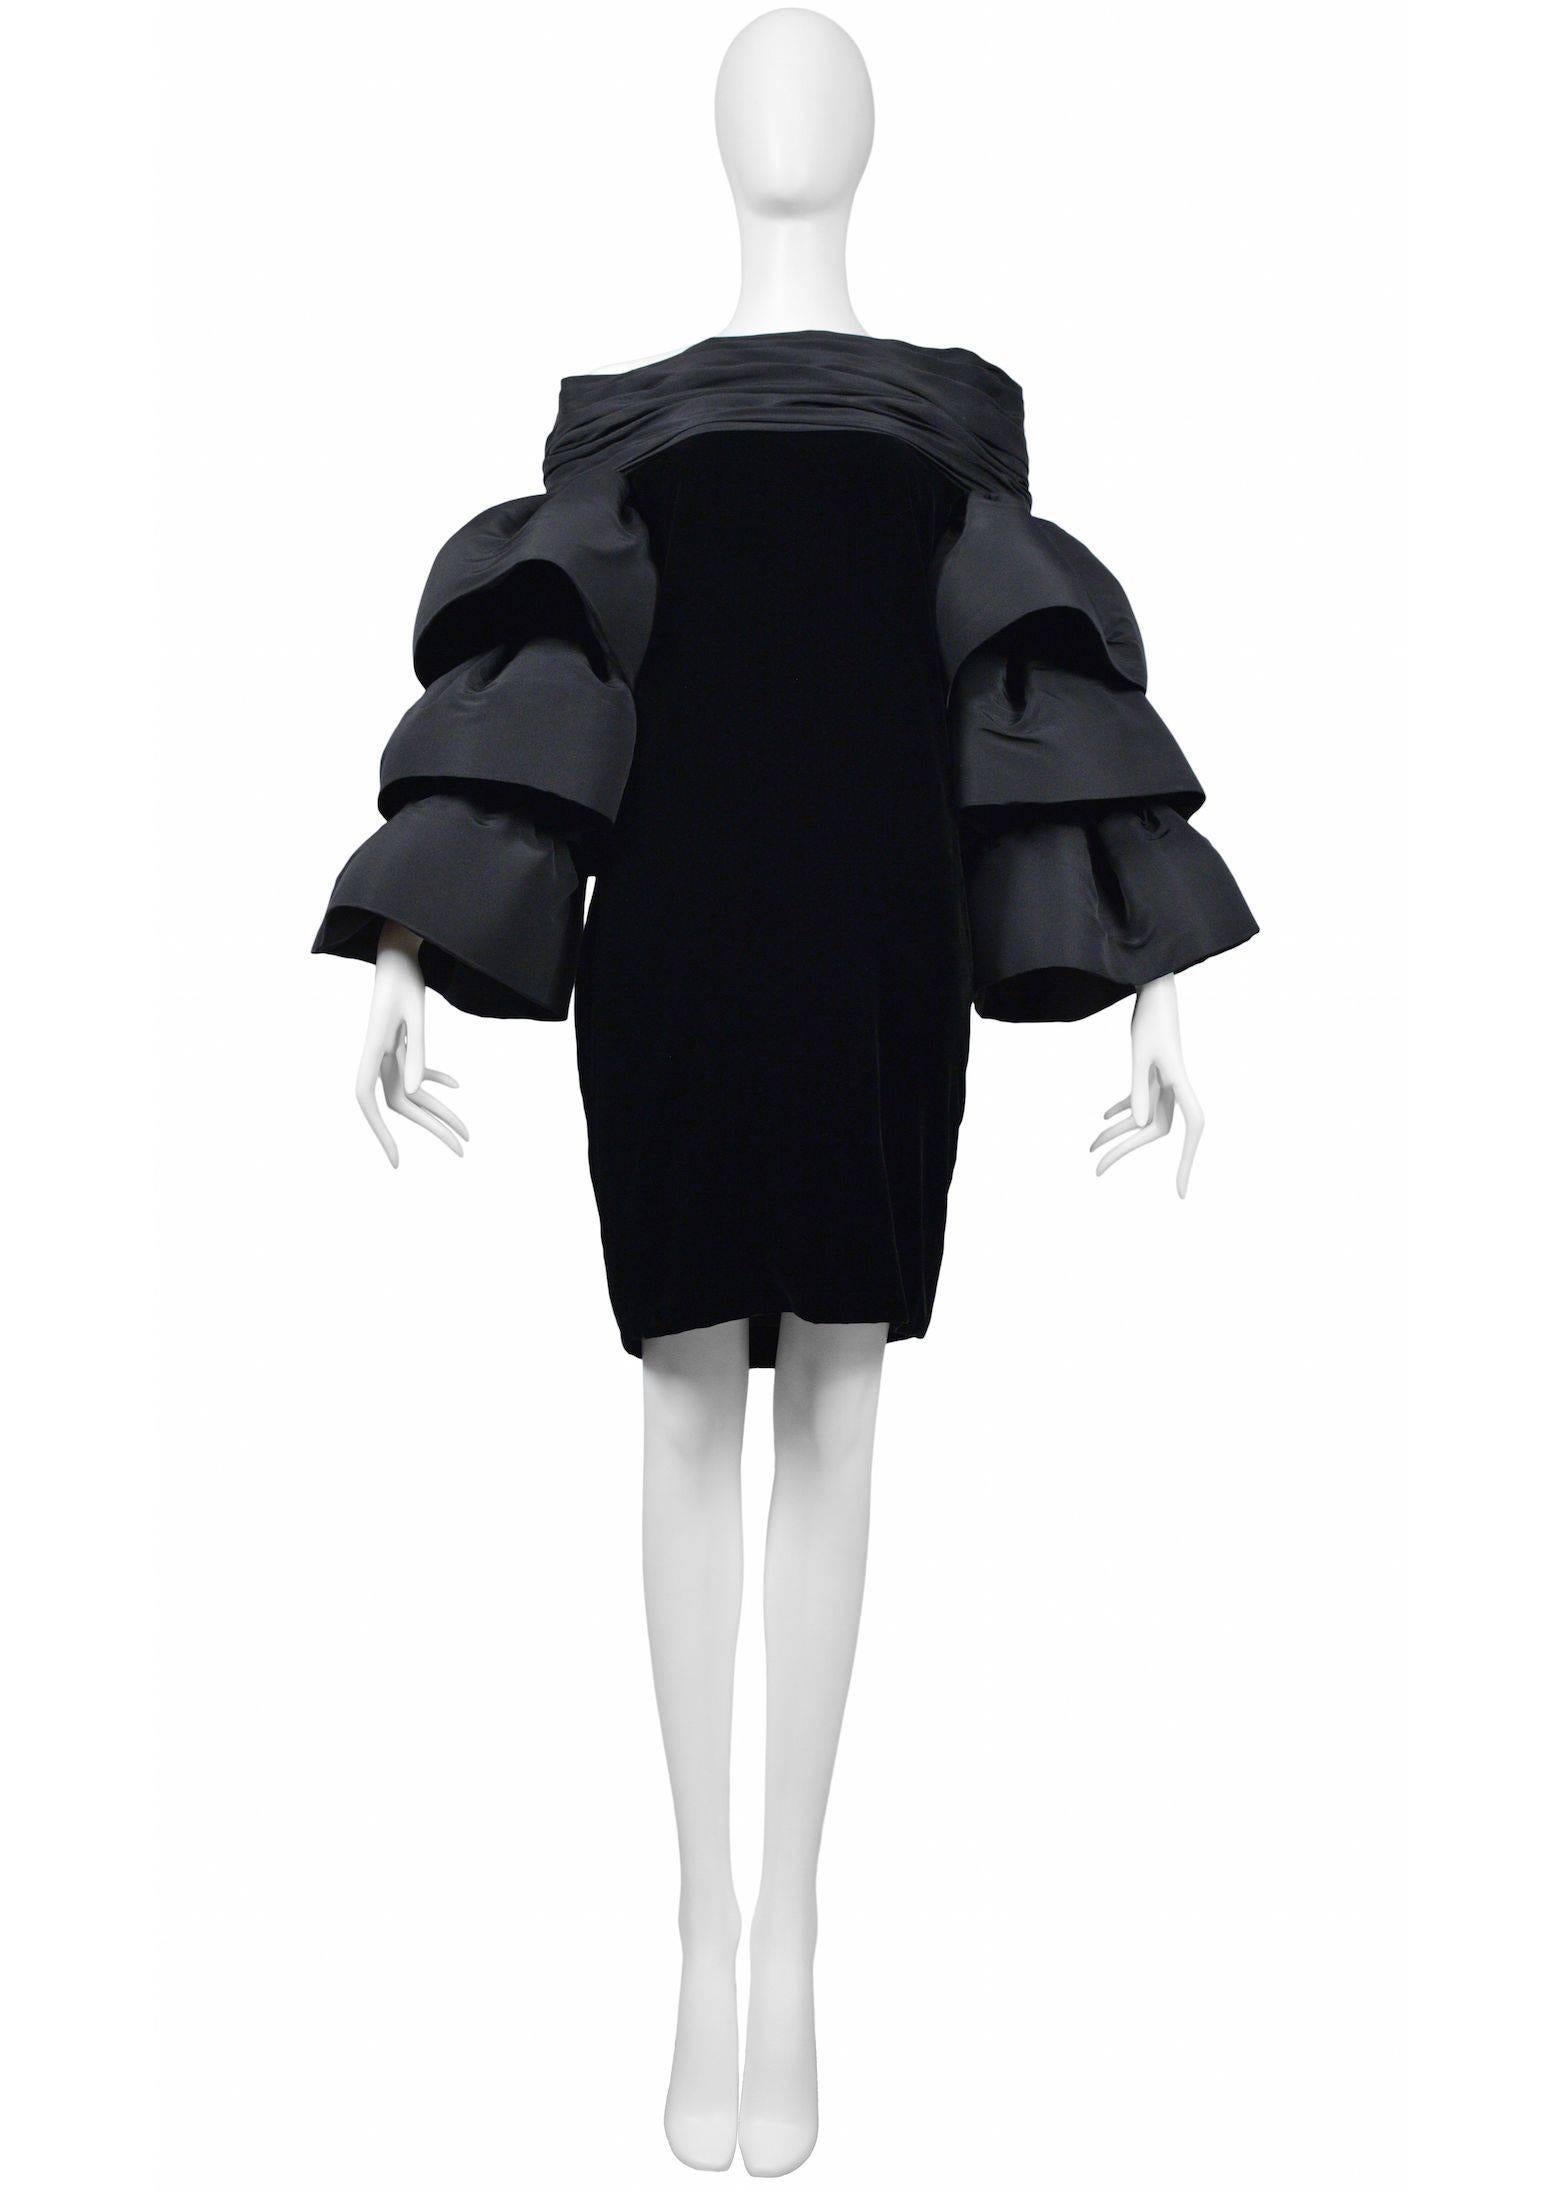 Pierre Cardin Couture black silk velvet dress with exaggerated black taffeta tiered sleeves. Strapless neckline. Circa, 1986-1993.